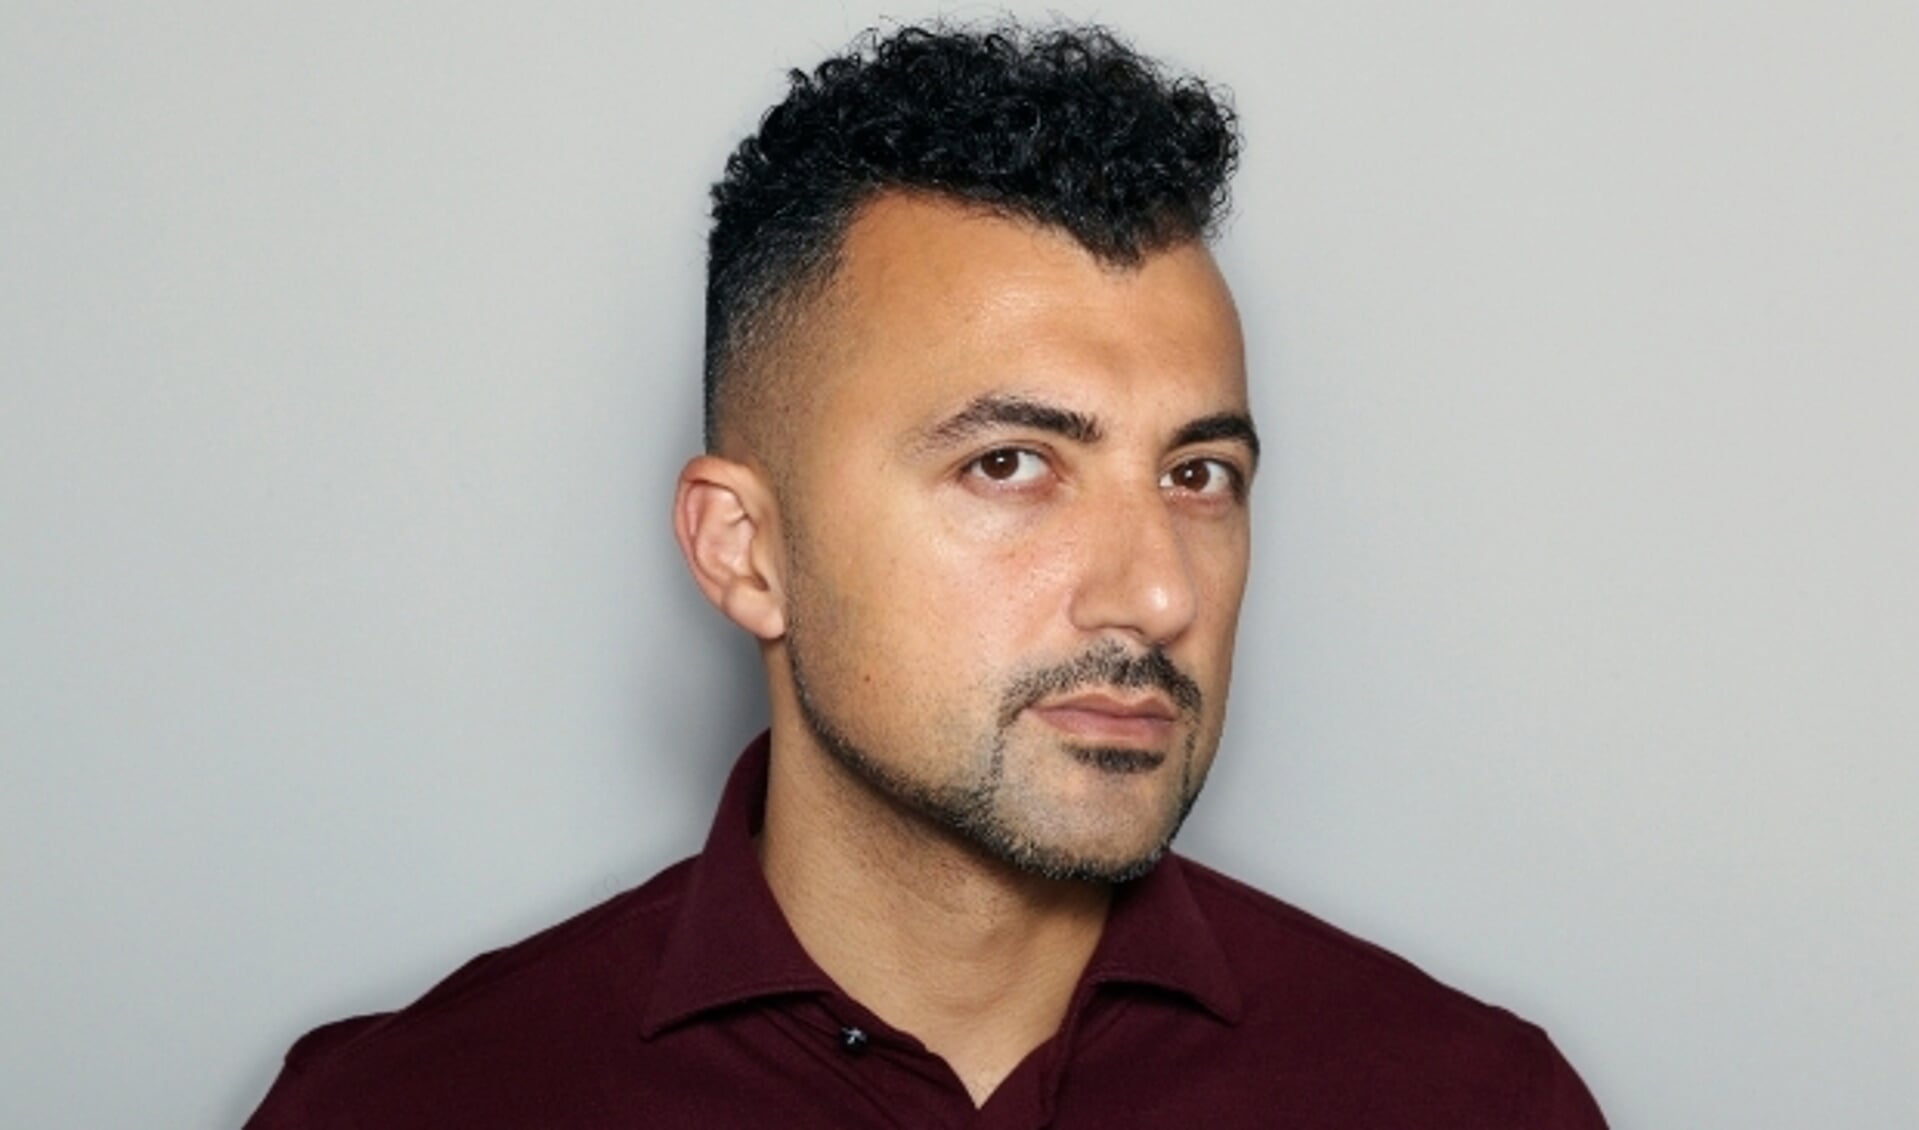 Schrijver, columnist en programmamaker Özcan Akyol.